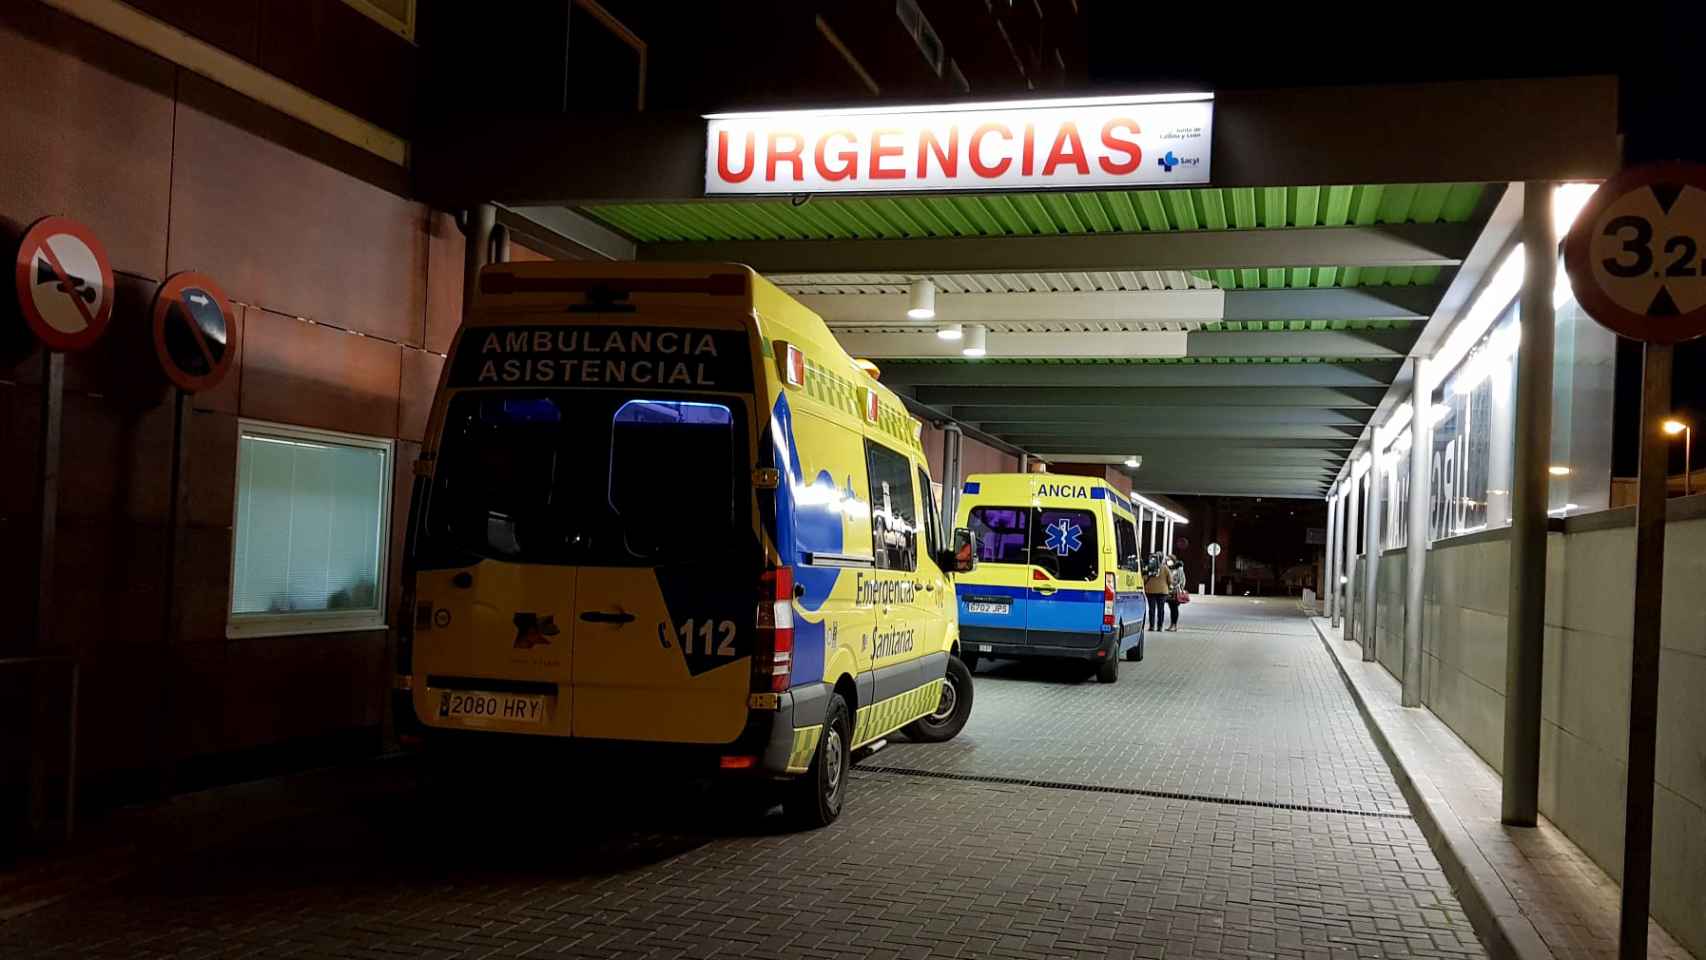 Ambulancia en Urgencias del Hospital de Zamora